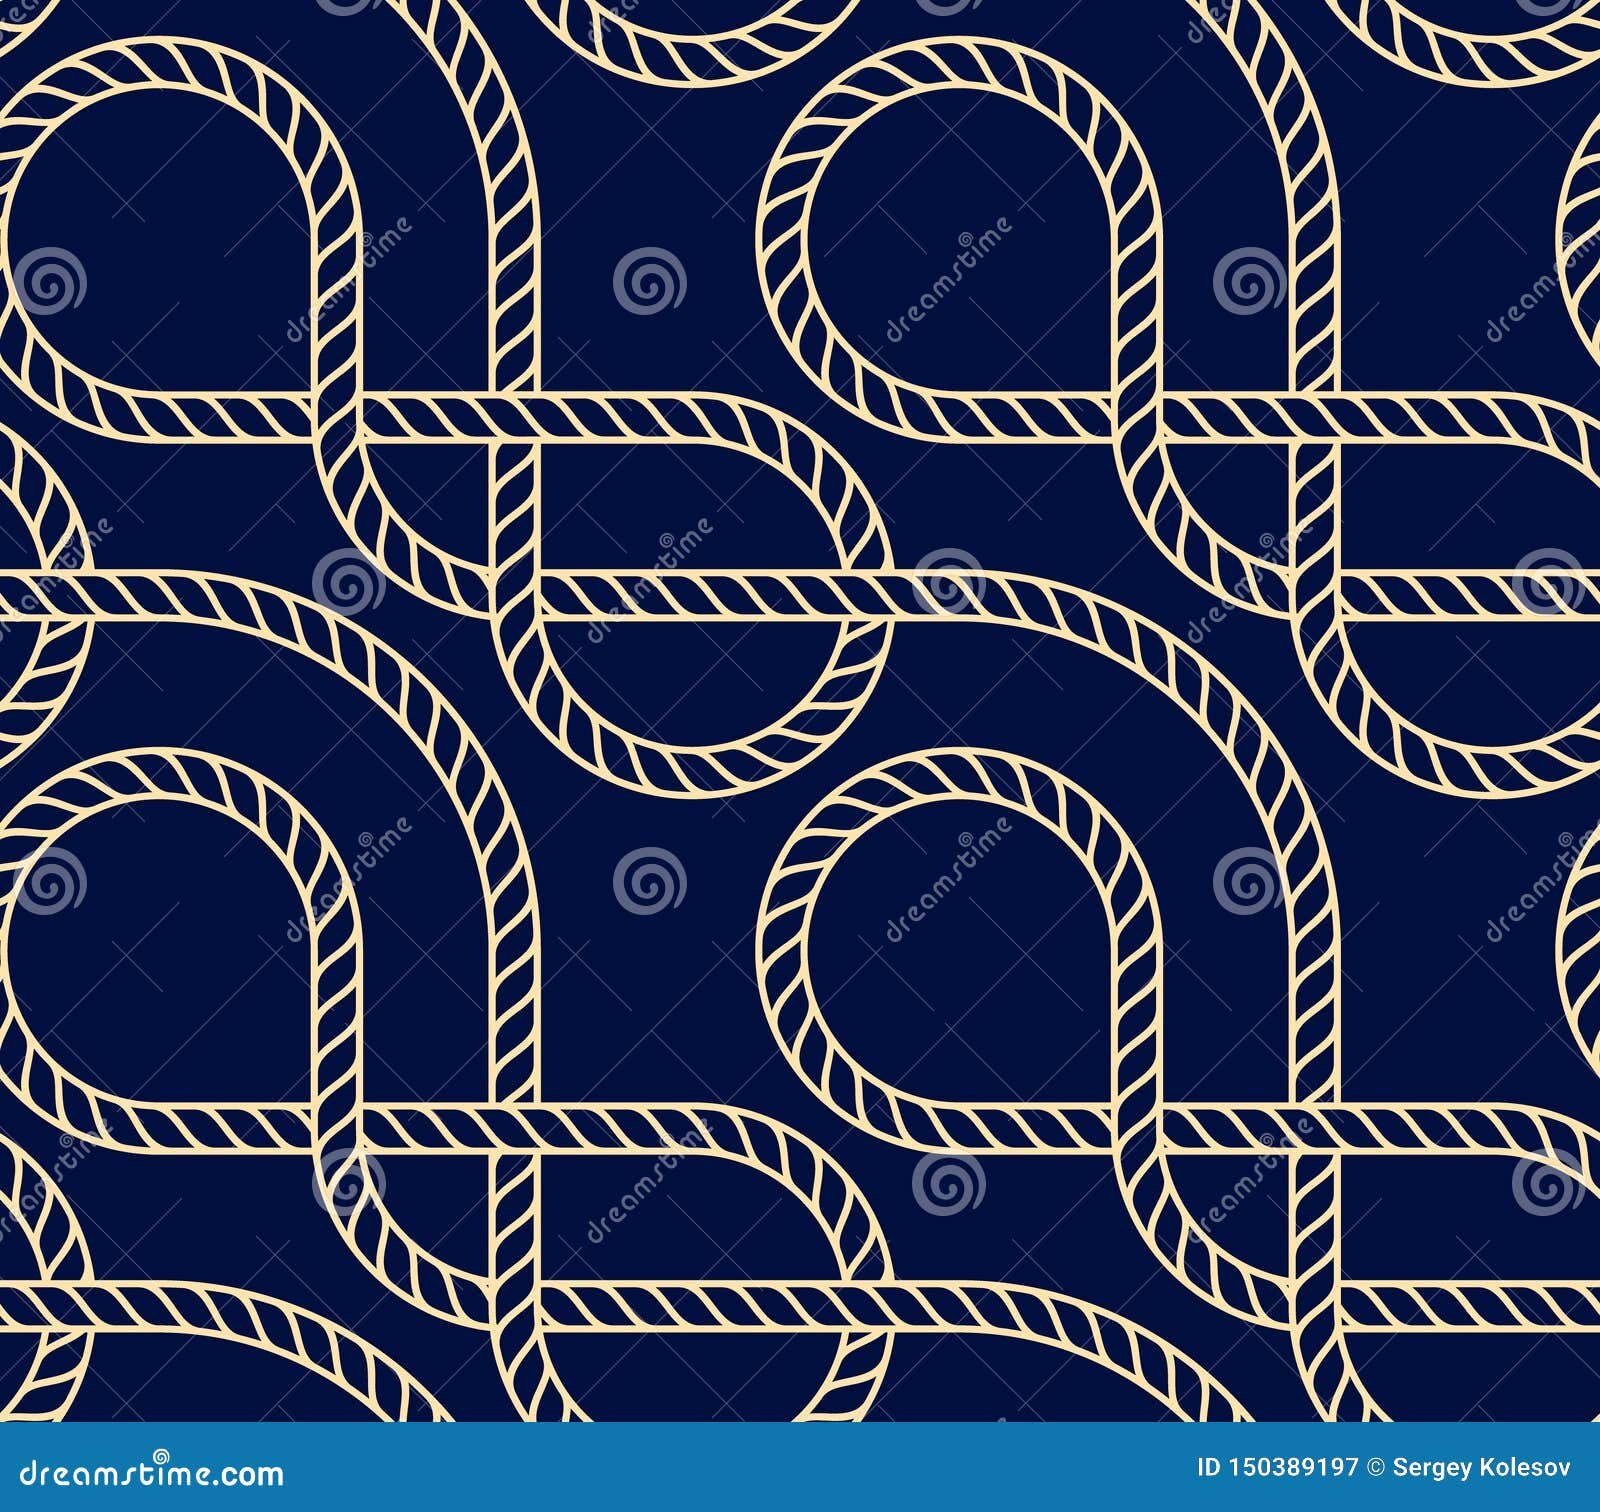  seamless background with marine rope. nautic pattern dark blue and gold